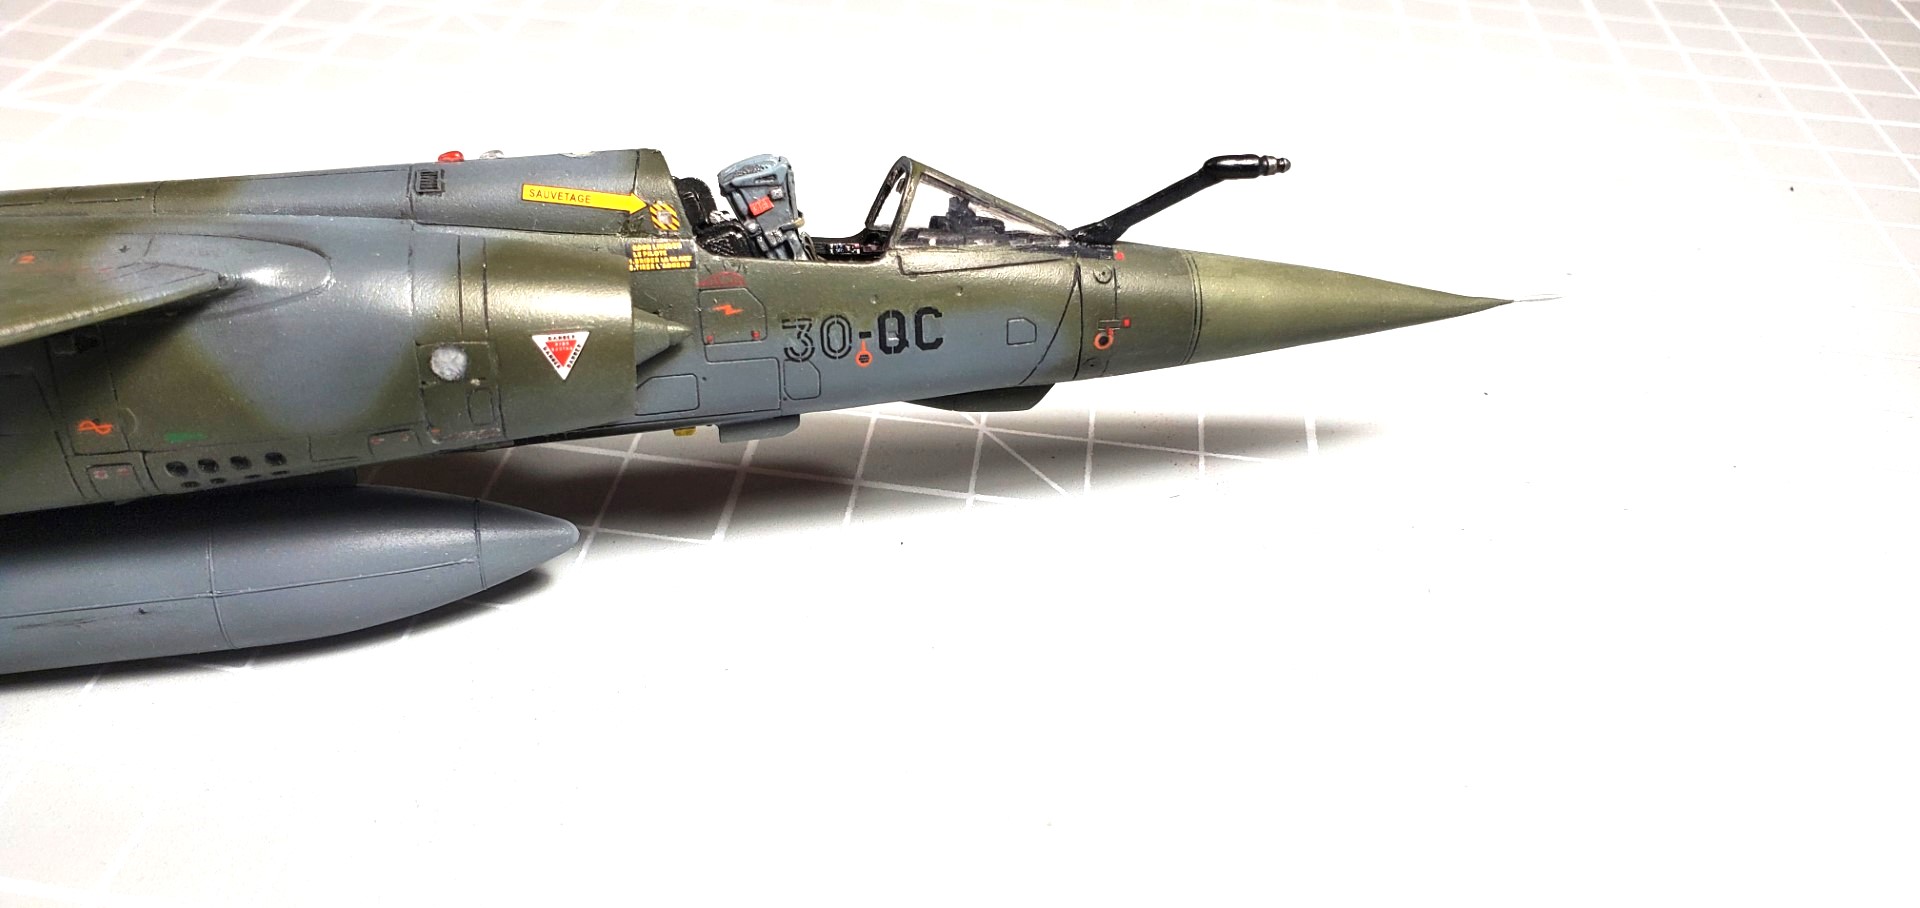 [Special Hobby] 1/72 - Dassault Mirage F1B /F1CR /F1CT  - oui mais pas tout seul !!, avec Eric Etchegaray et Modelix  (mf1b) - Page 7 Thumb892